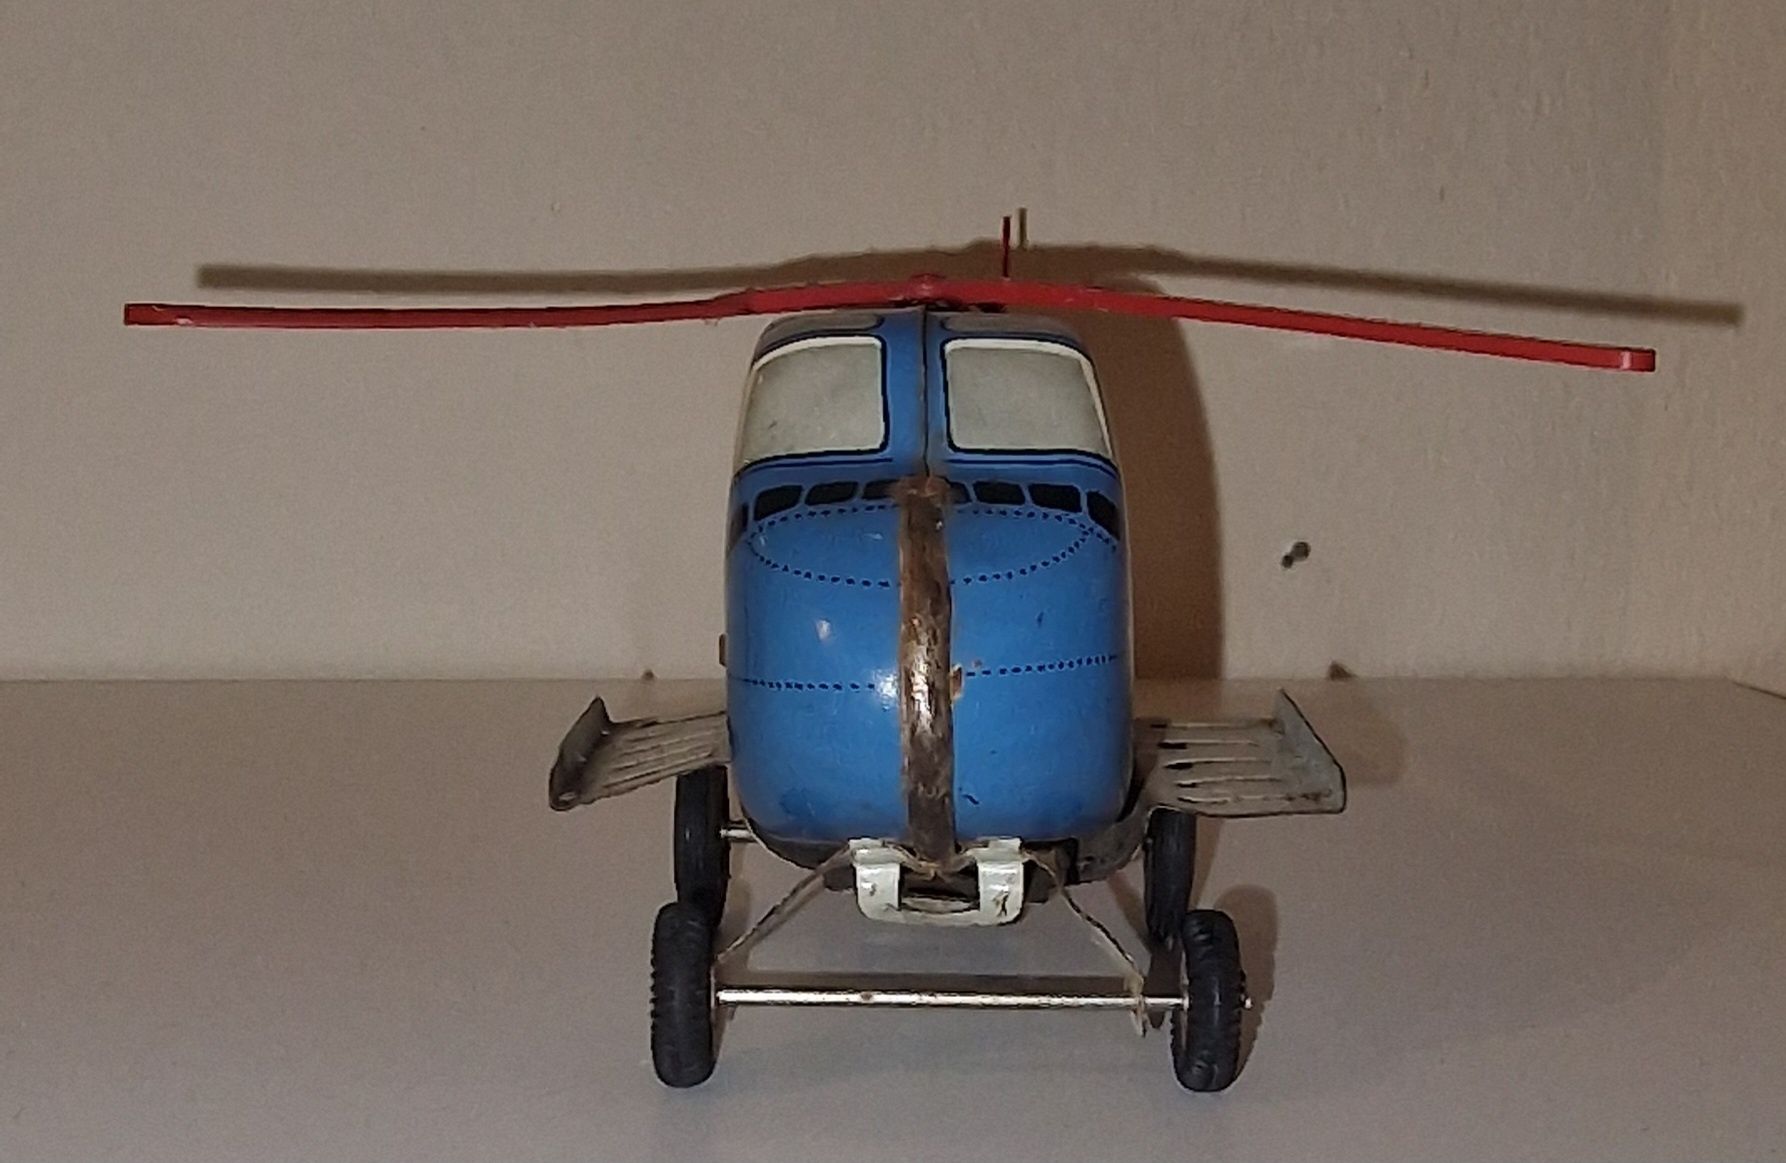 Helicóptero de chapa muito antigo